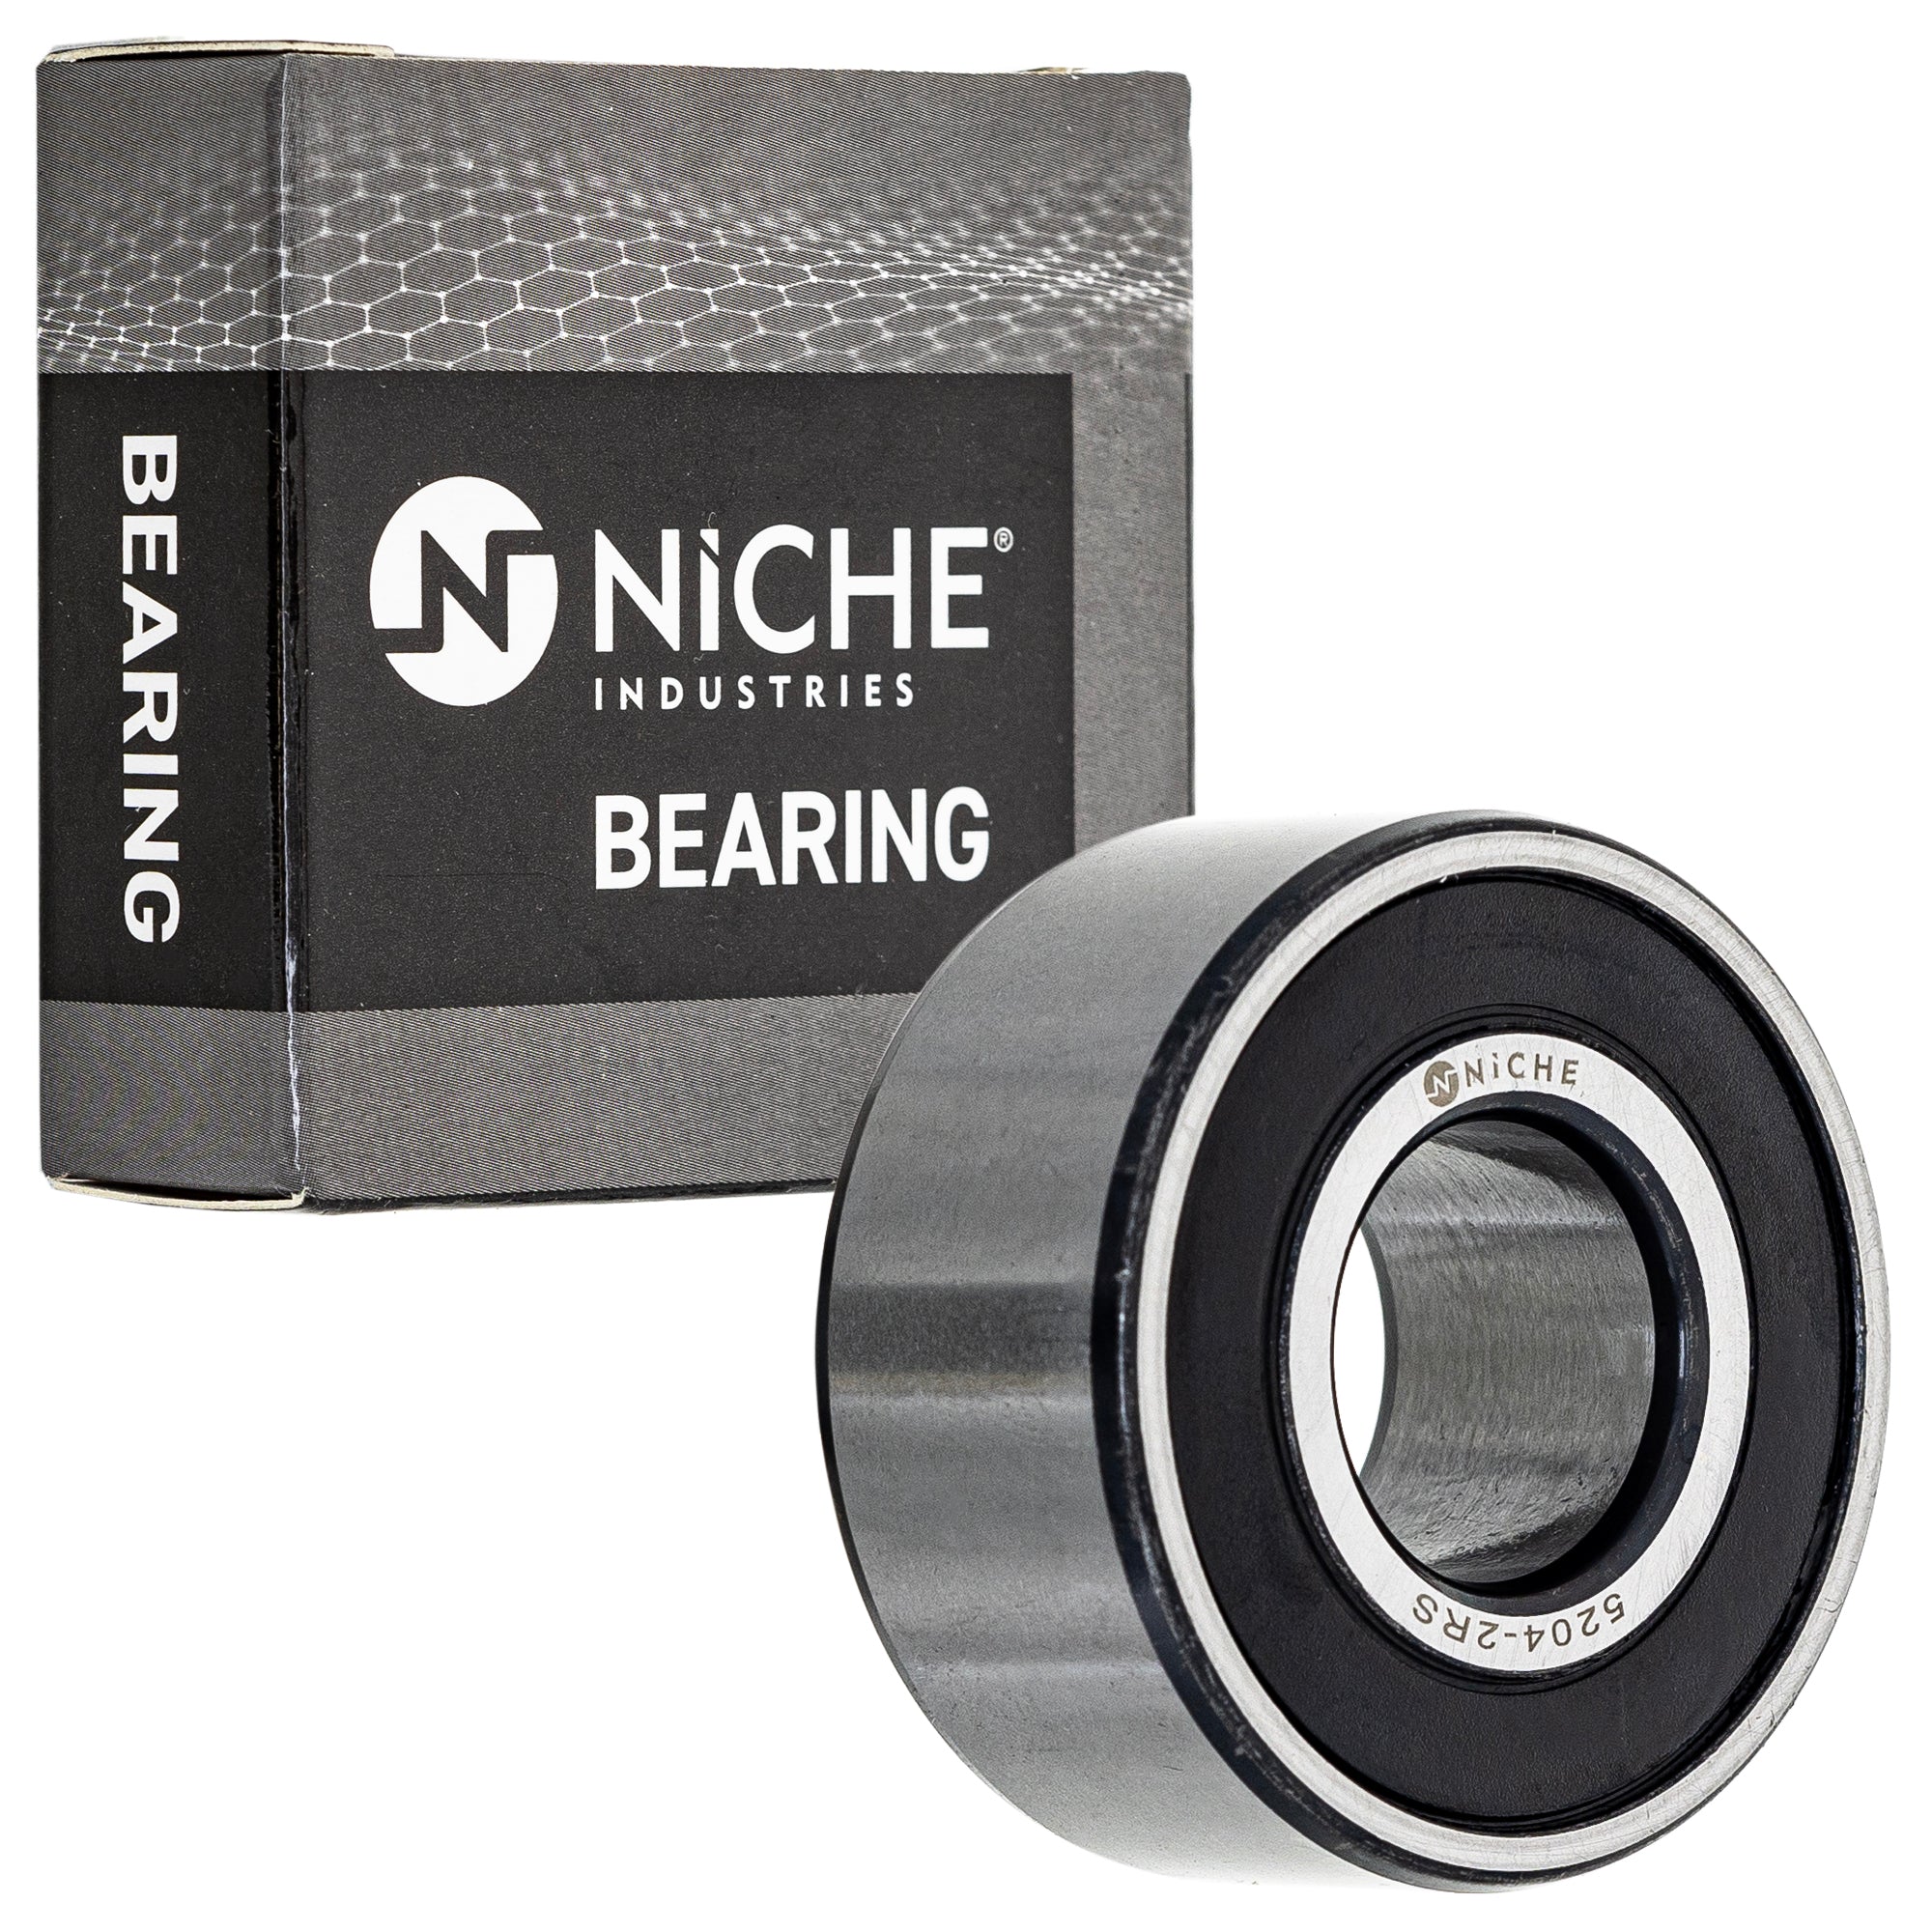 NICHE 519-CBB2260R Bearing 10-Pack for zOTHER VTX1800T3 VTX1800T2